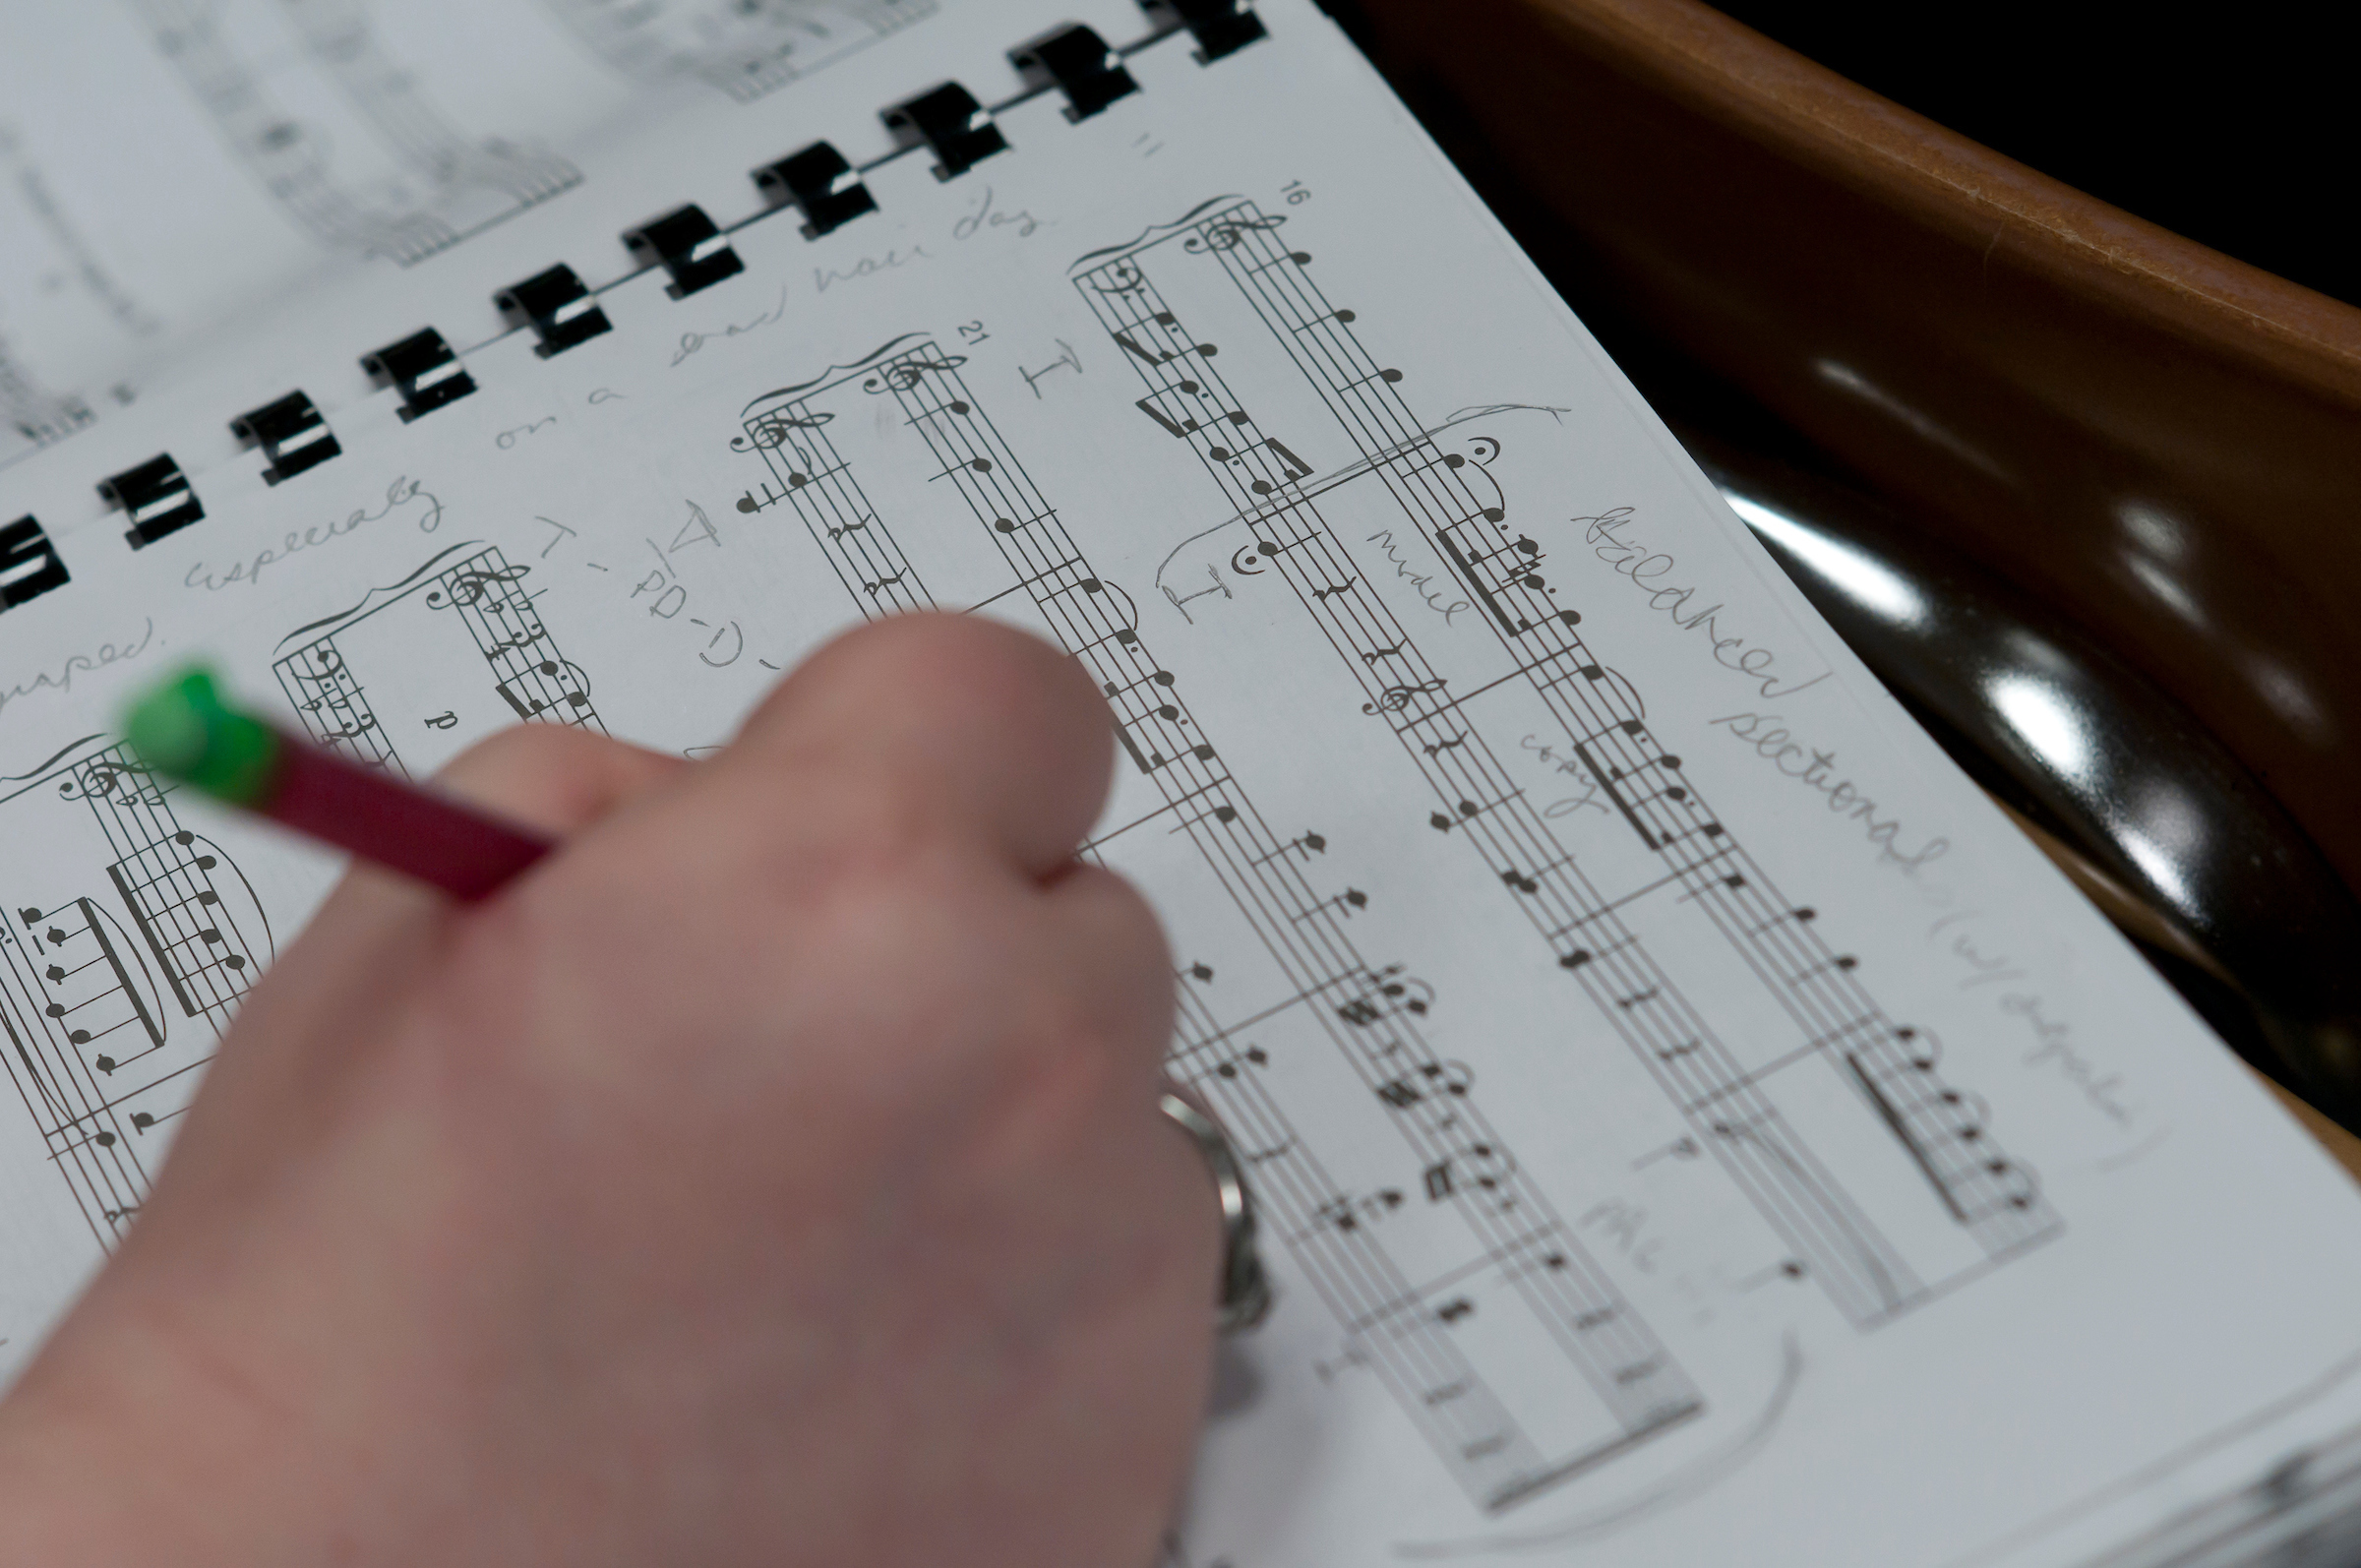 Music major writes notes on sheet music